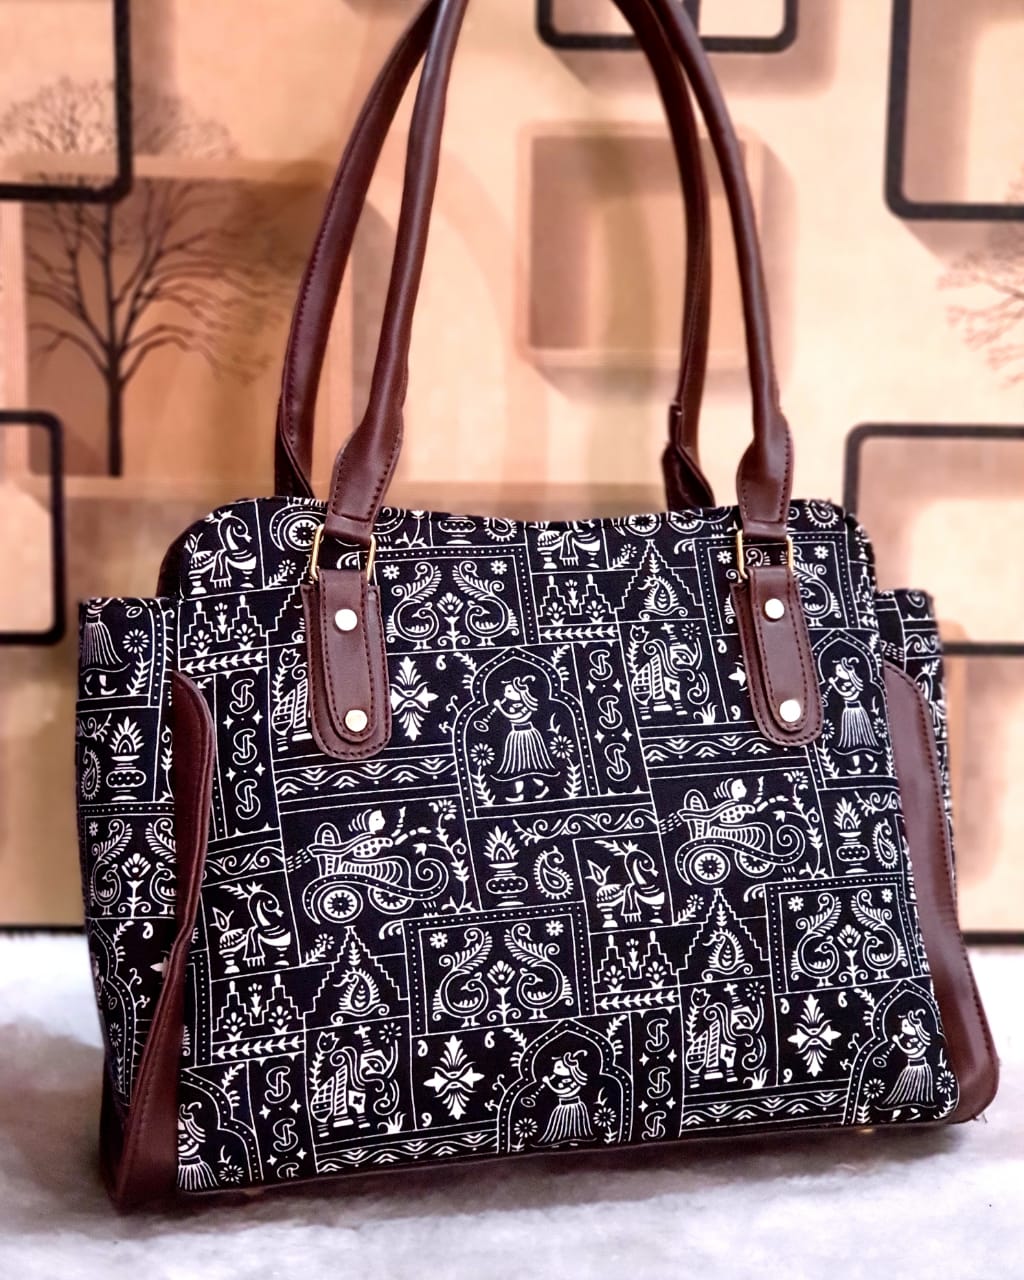 HAND BAG RAJASTHANI Jaipuri Art Sling Bag Foldover Clutch Purse Quality  Checked $26.10 - PicClick